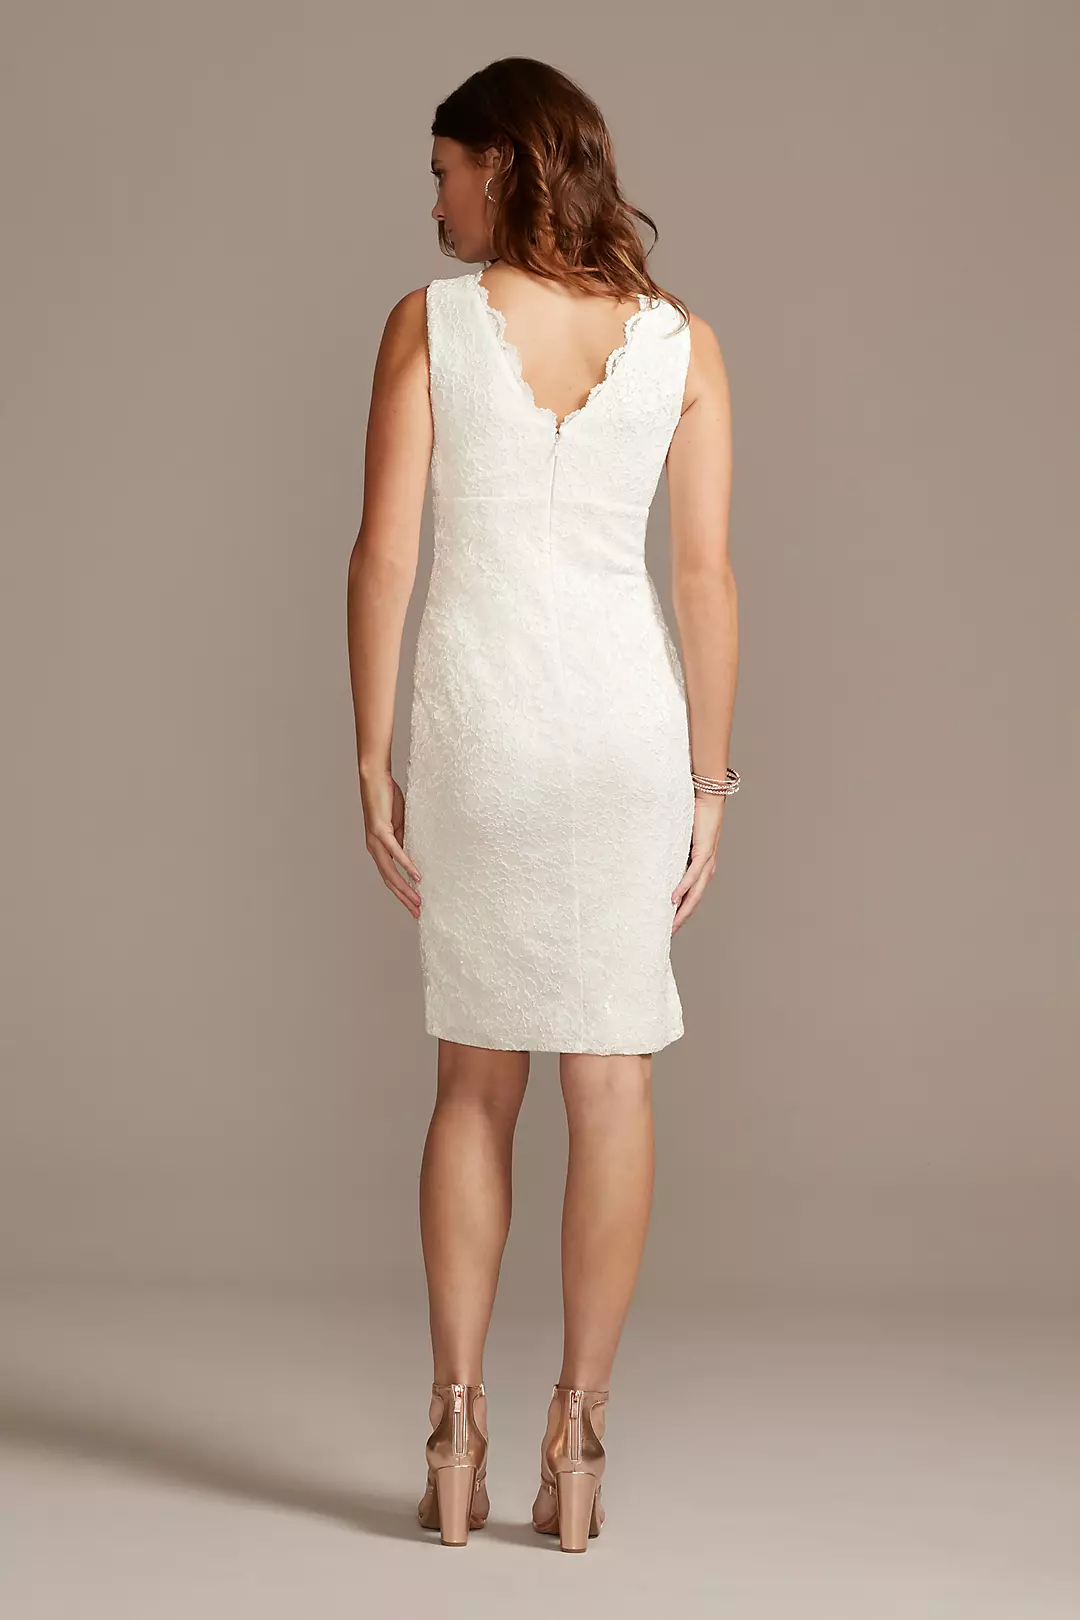 Scalloped Lace V-Neck Sheath Knee-Length Dress Image 2